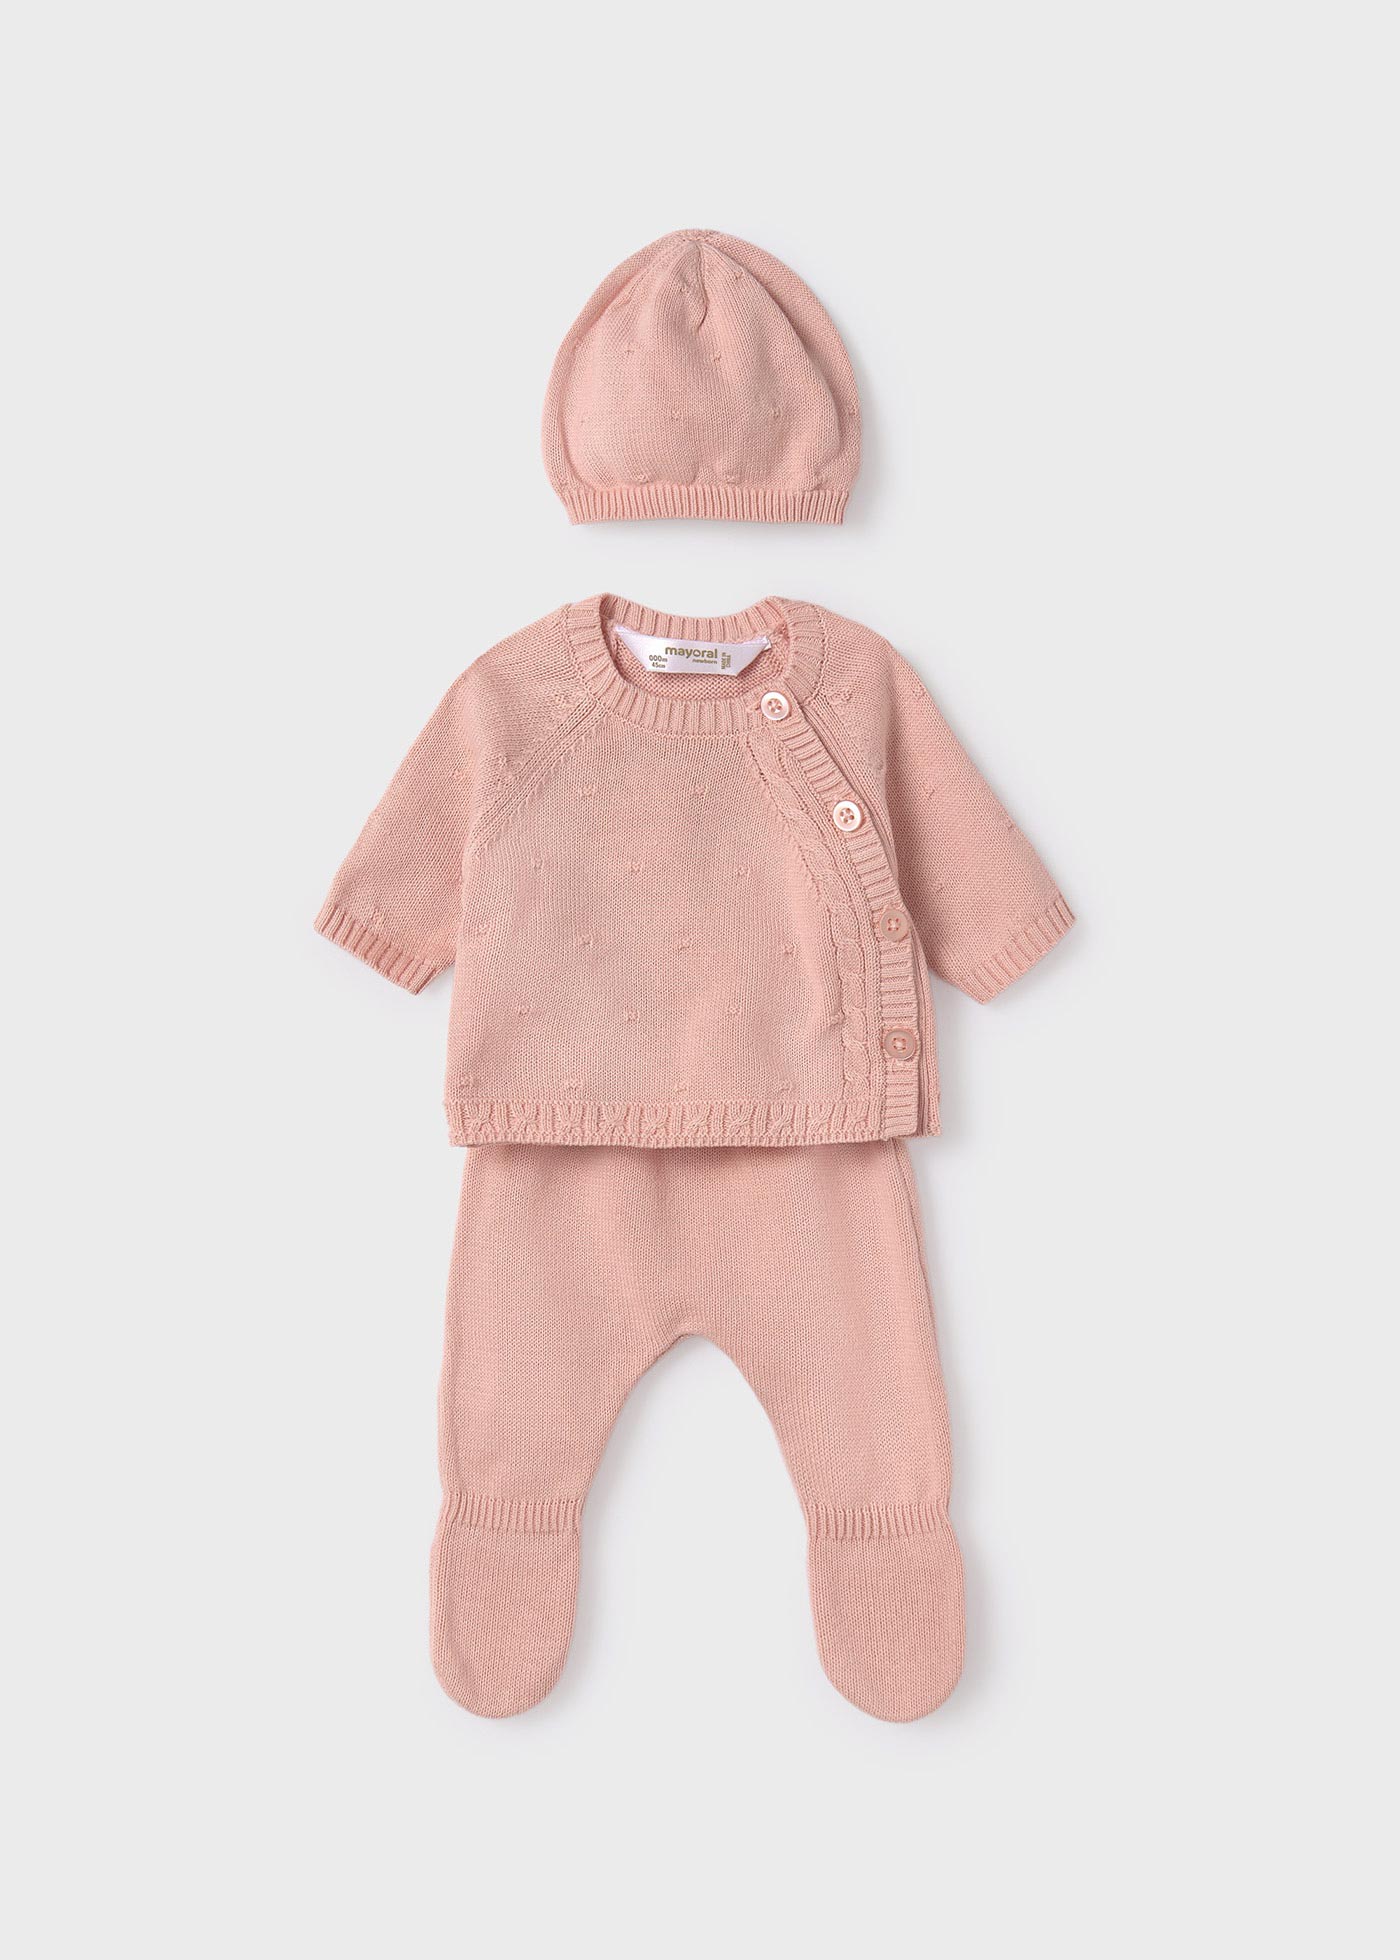 cotton organic baby knit ® pink Misty Mayoral | 3-piece set